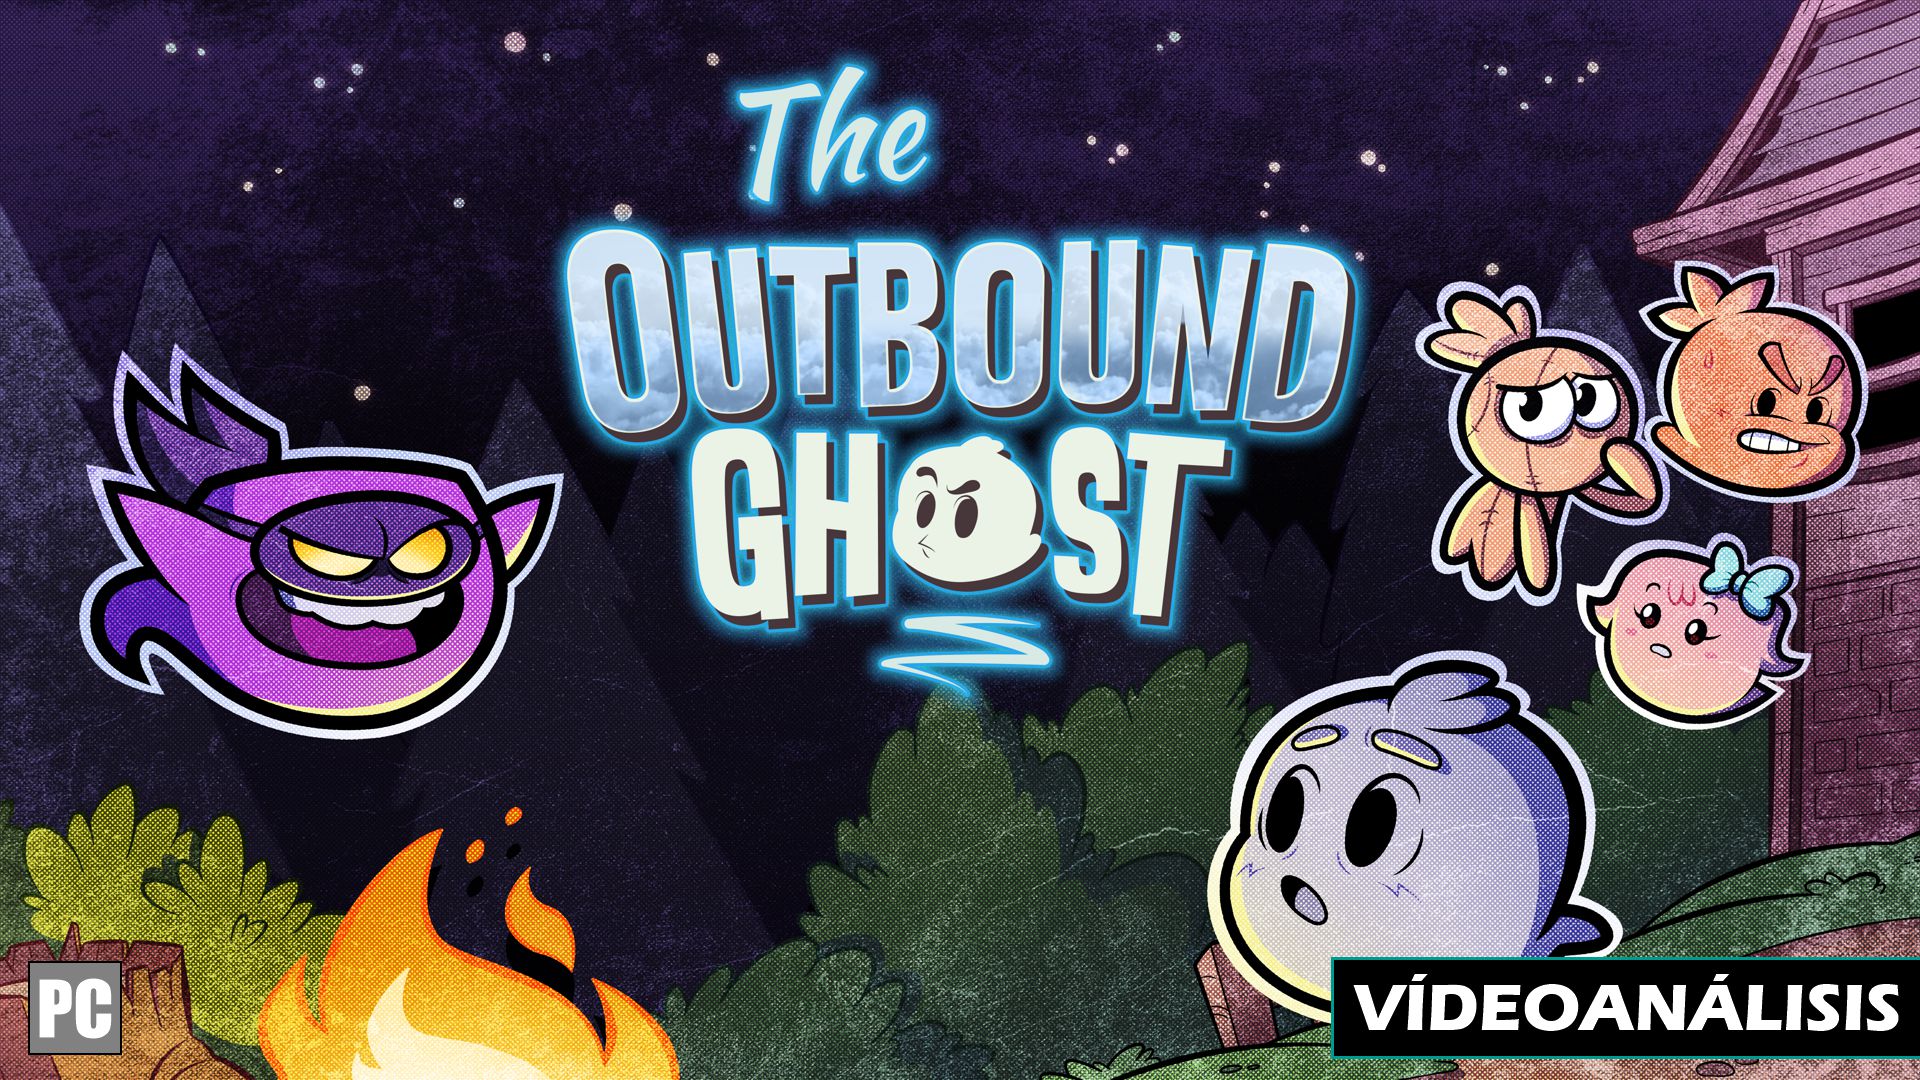 Vídeo análisis de The Outbound Ghost